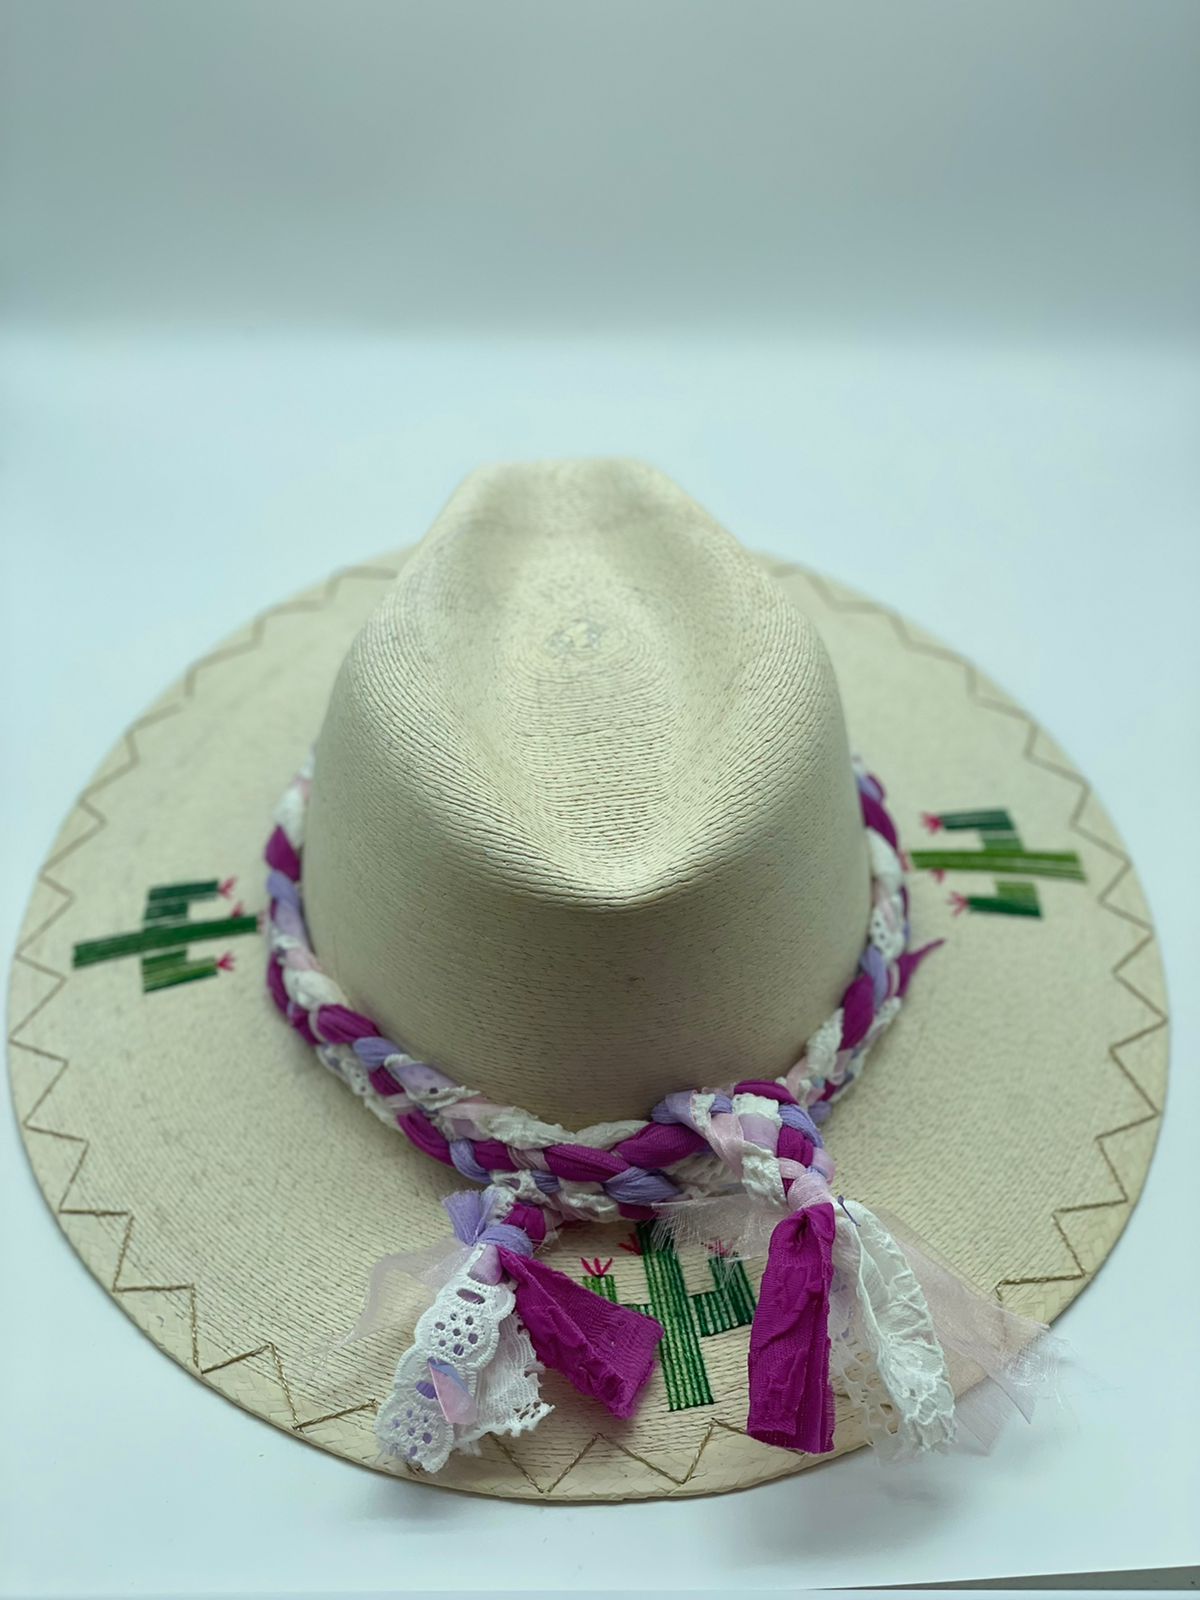 Exclusive Cactus Hat by Corazon Playero